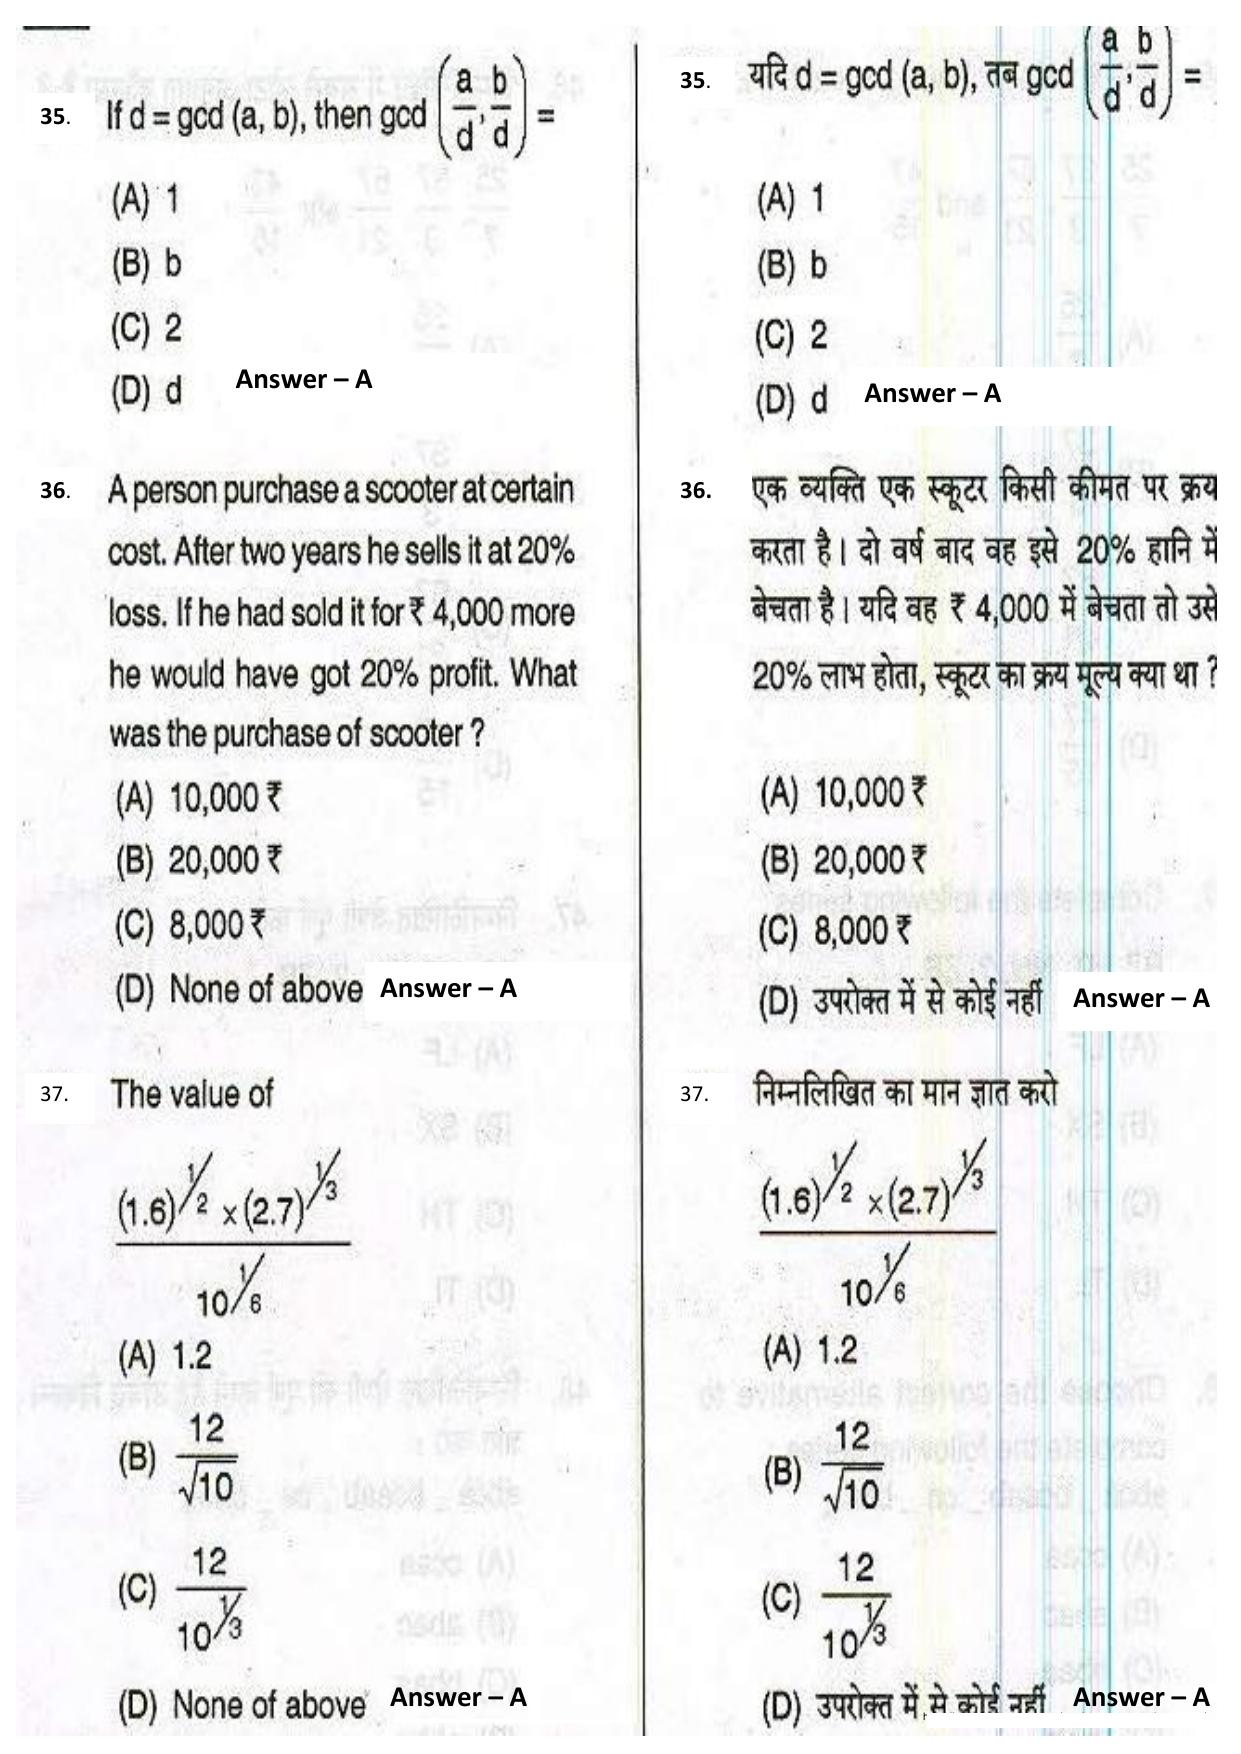 IGM Kolkata Quantitative Aptitude Model Papers - Page 15